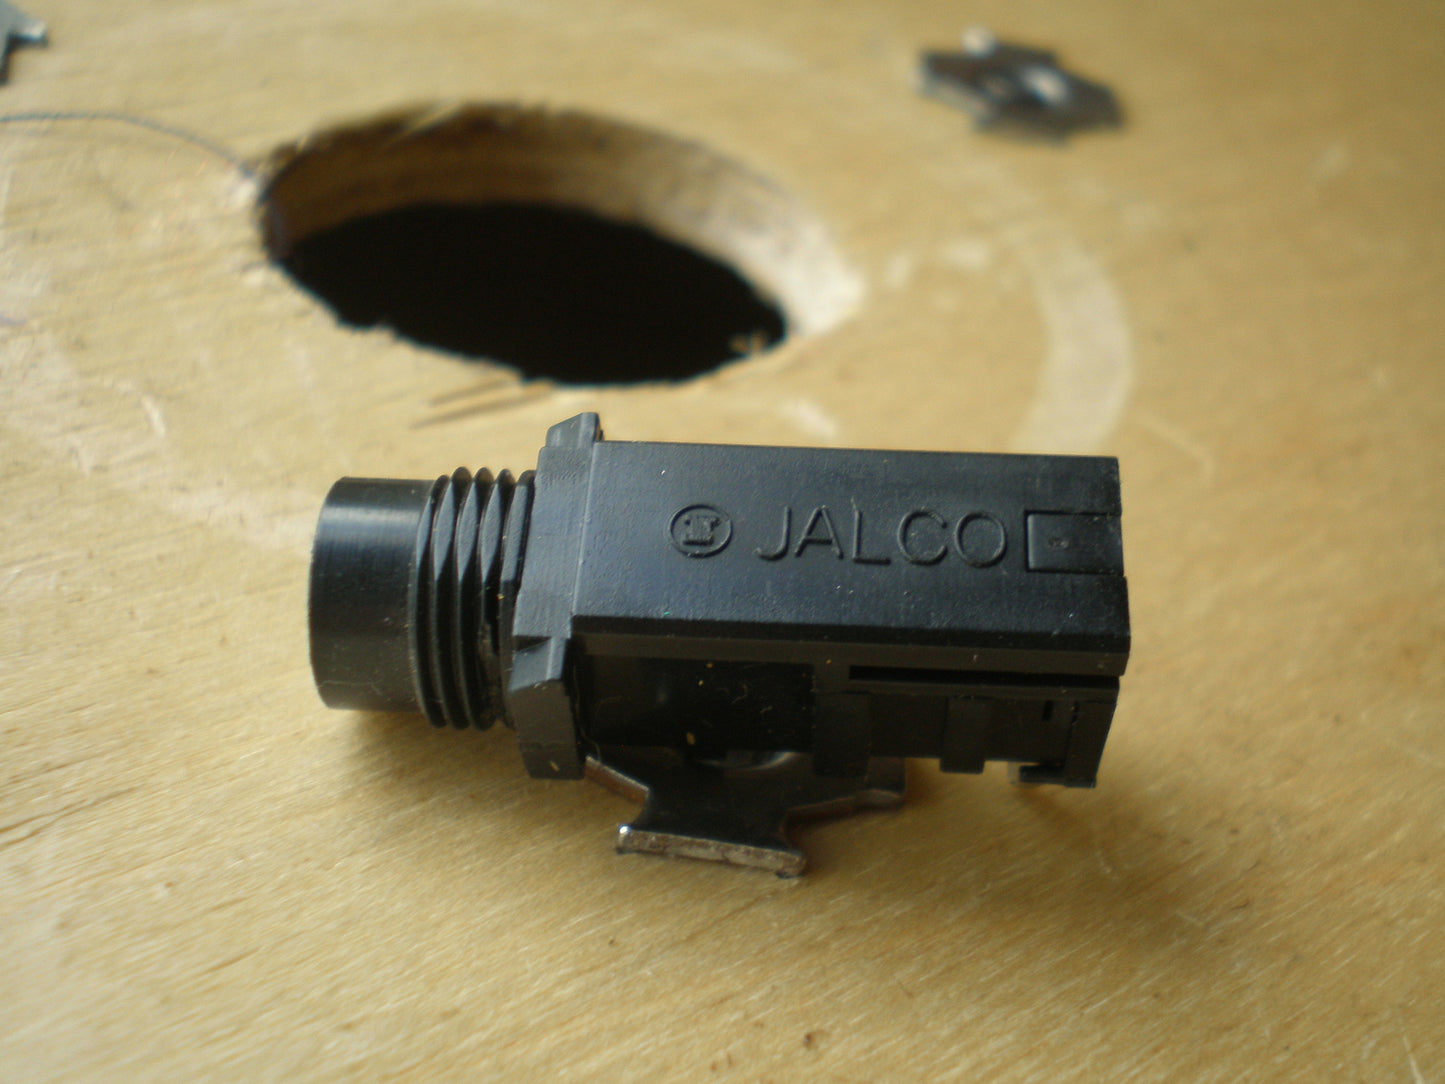 Tascam Jalco Jack sockets